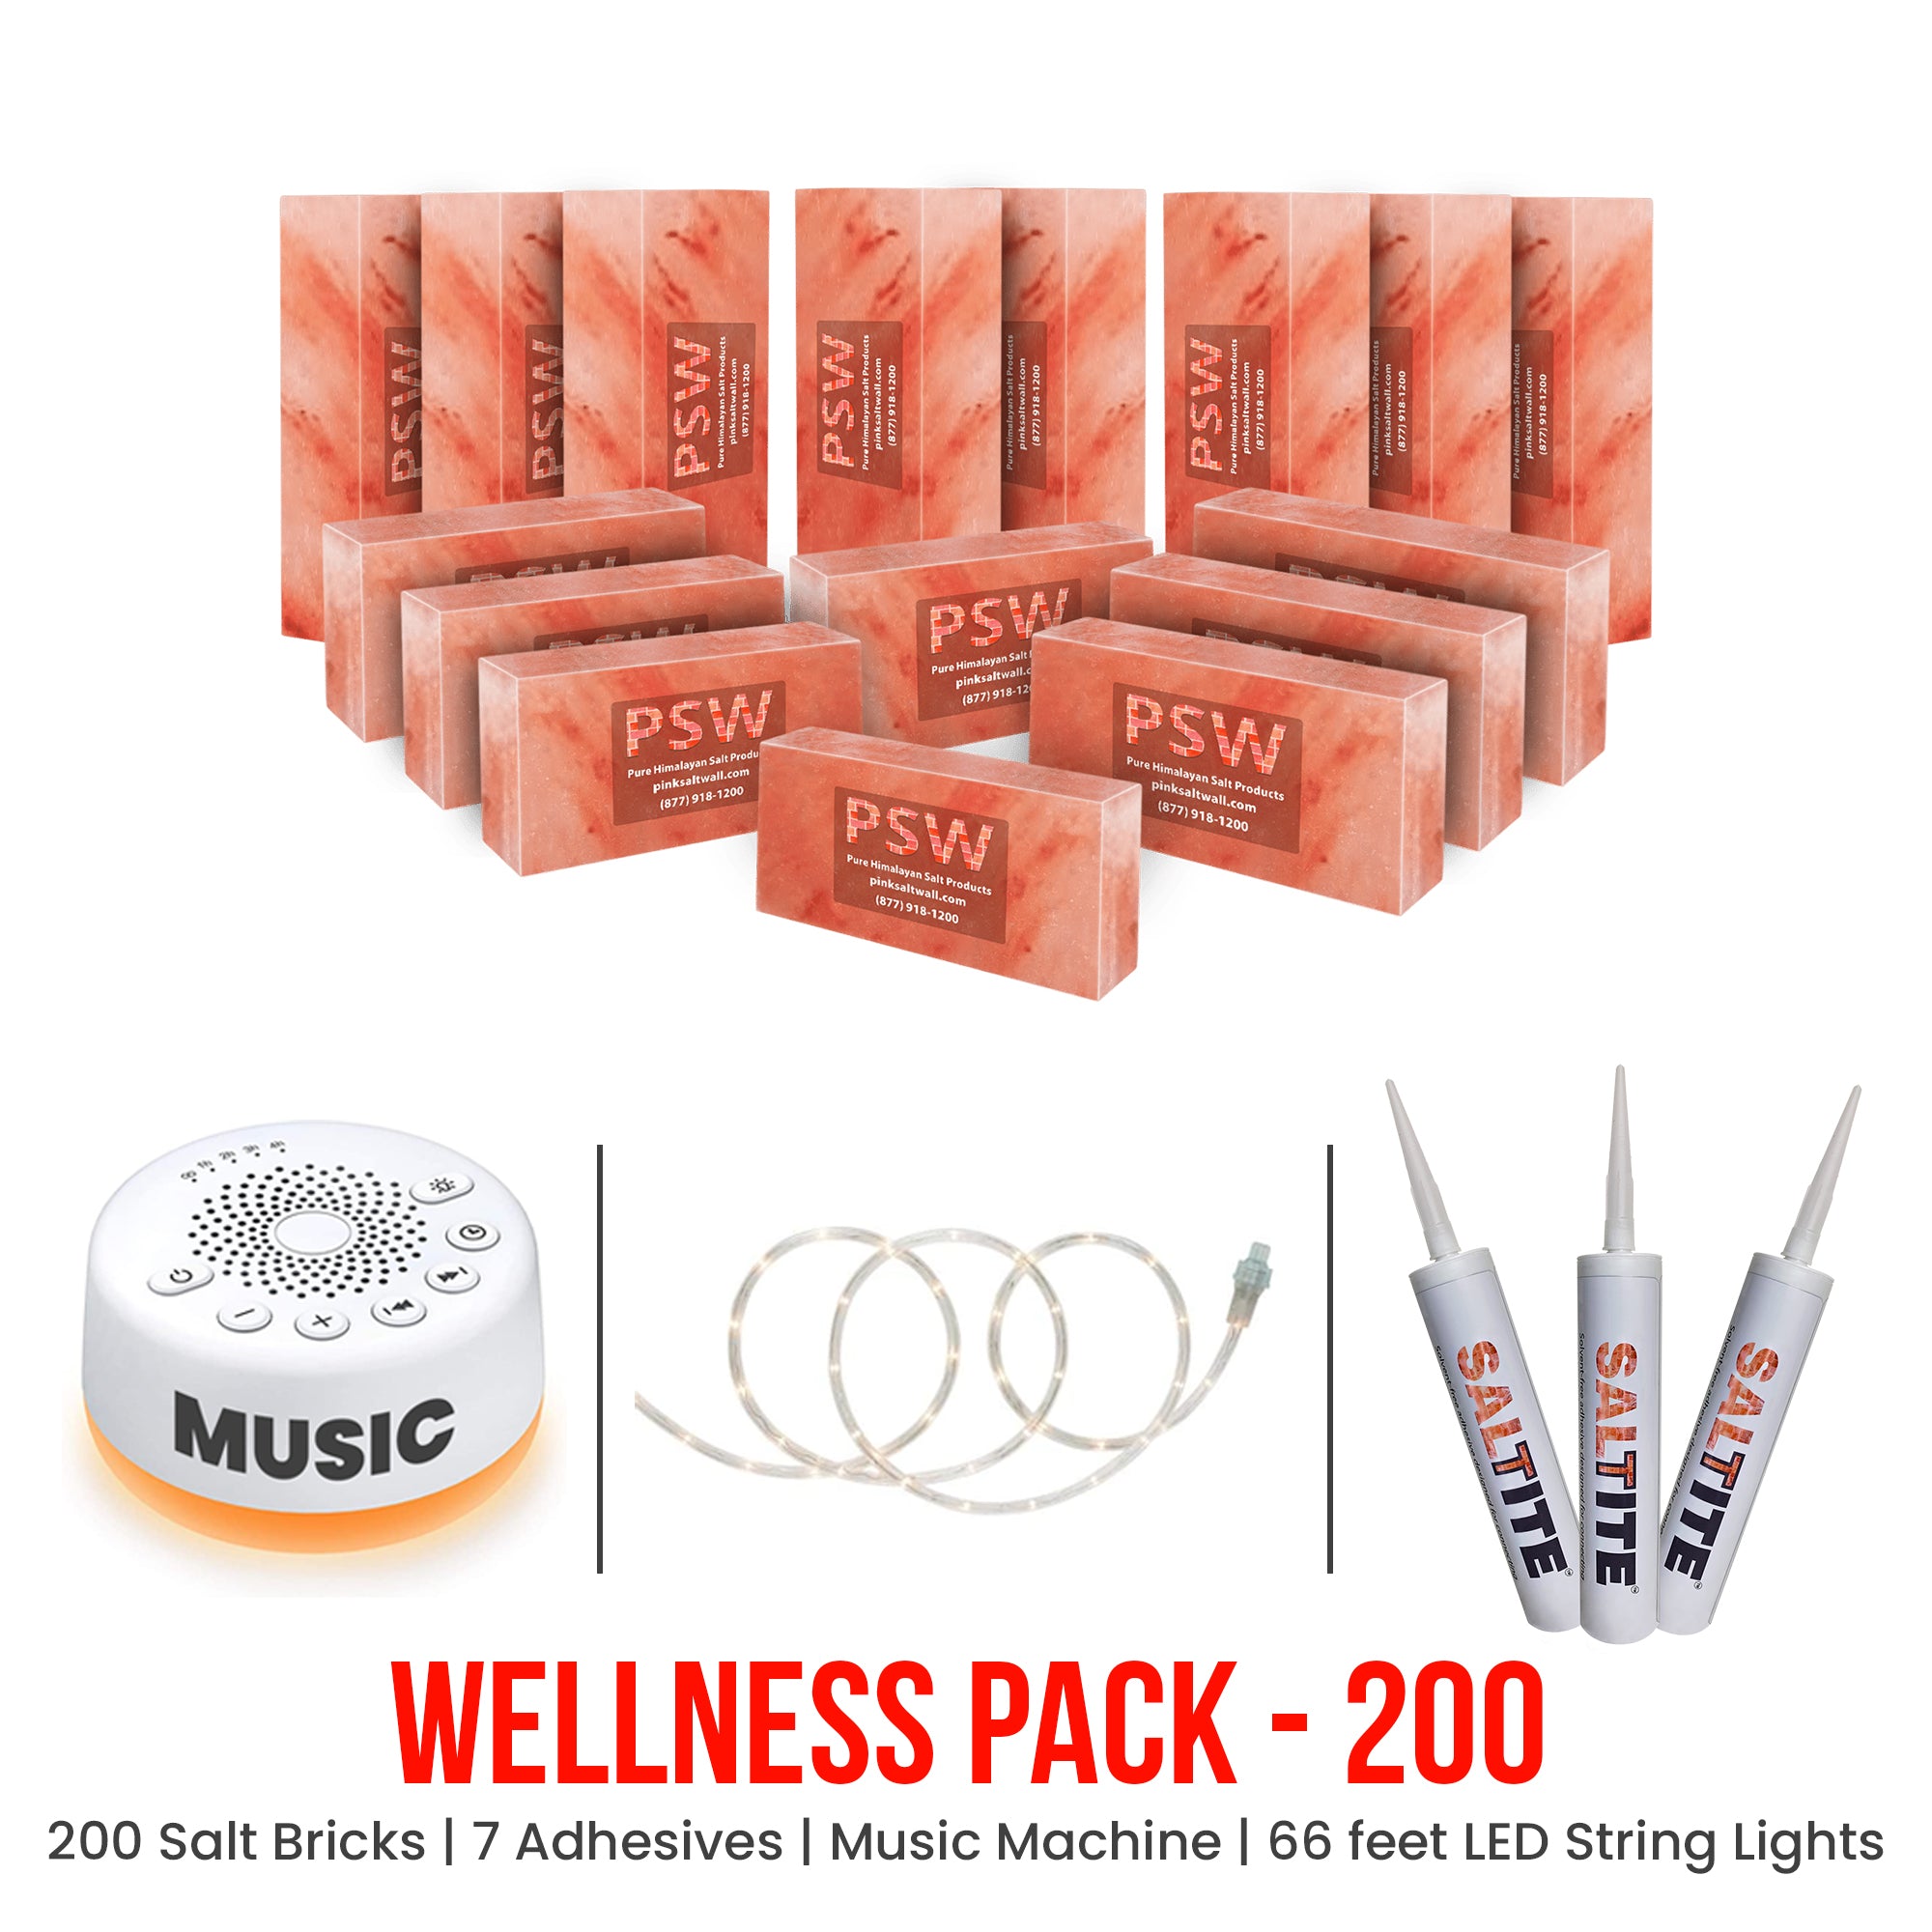 Wellness Pack - 200